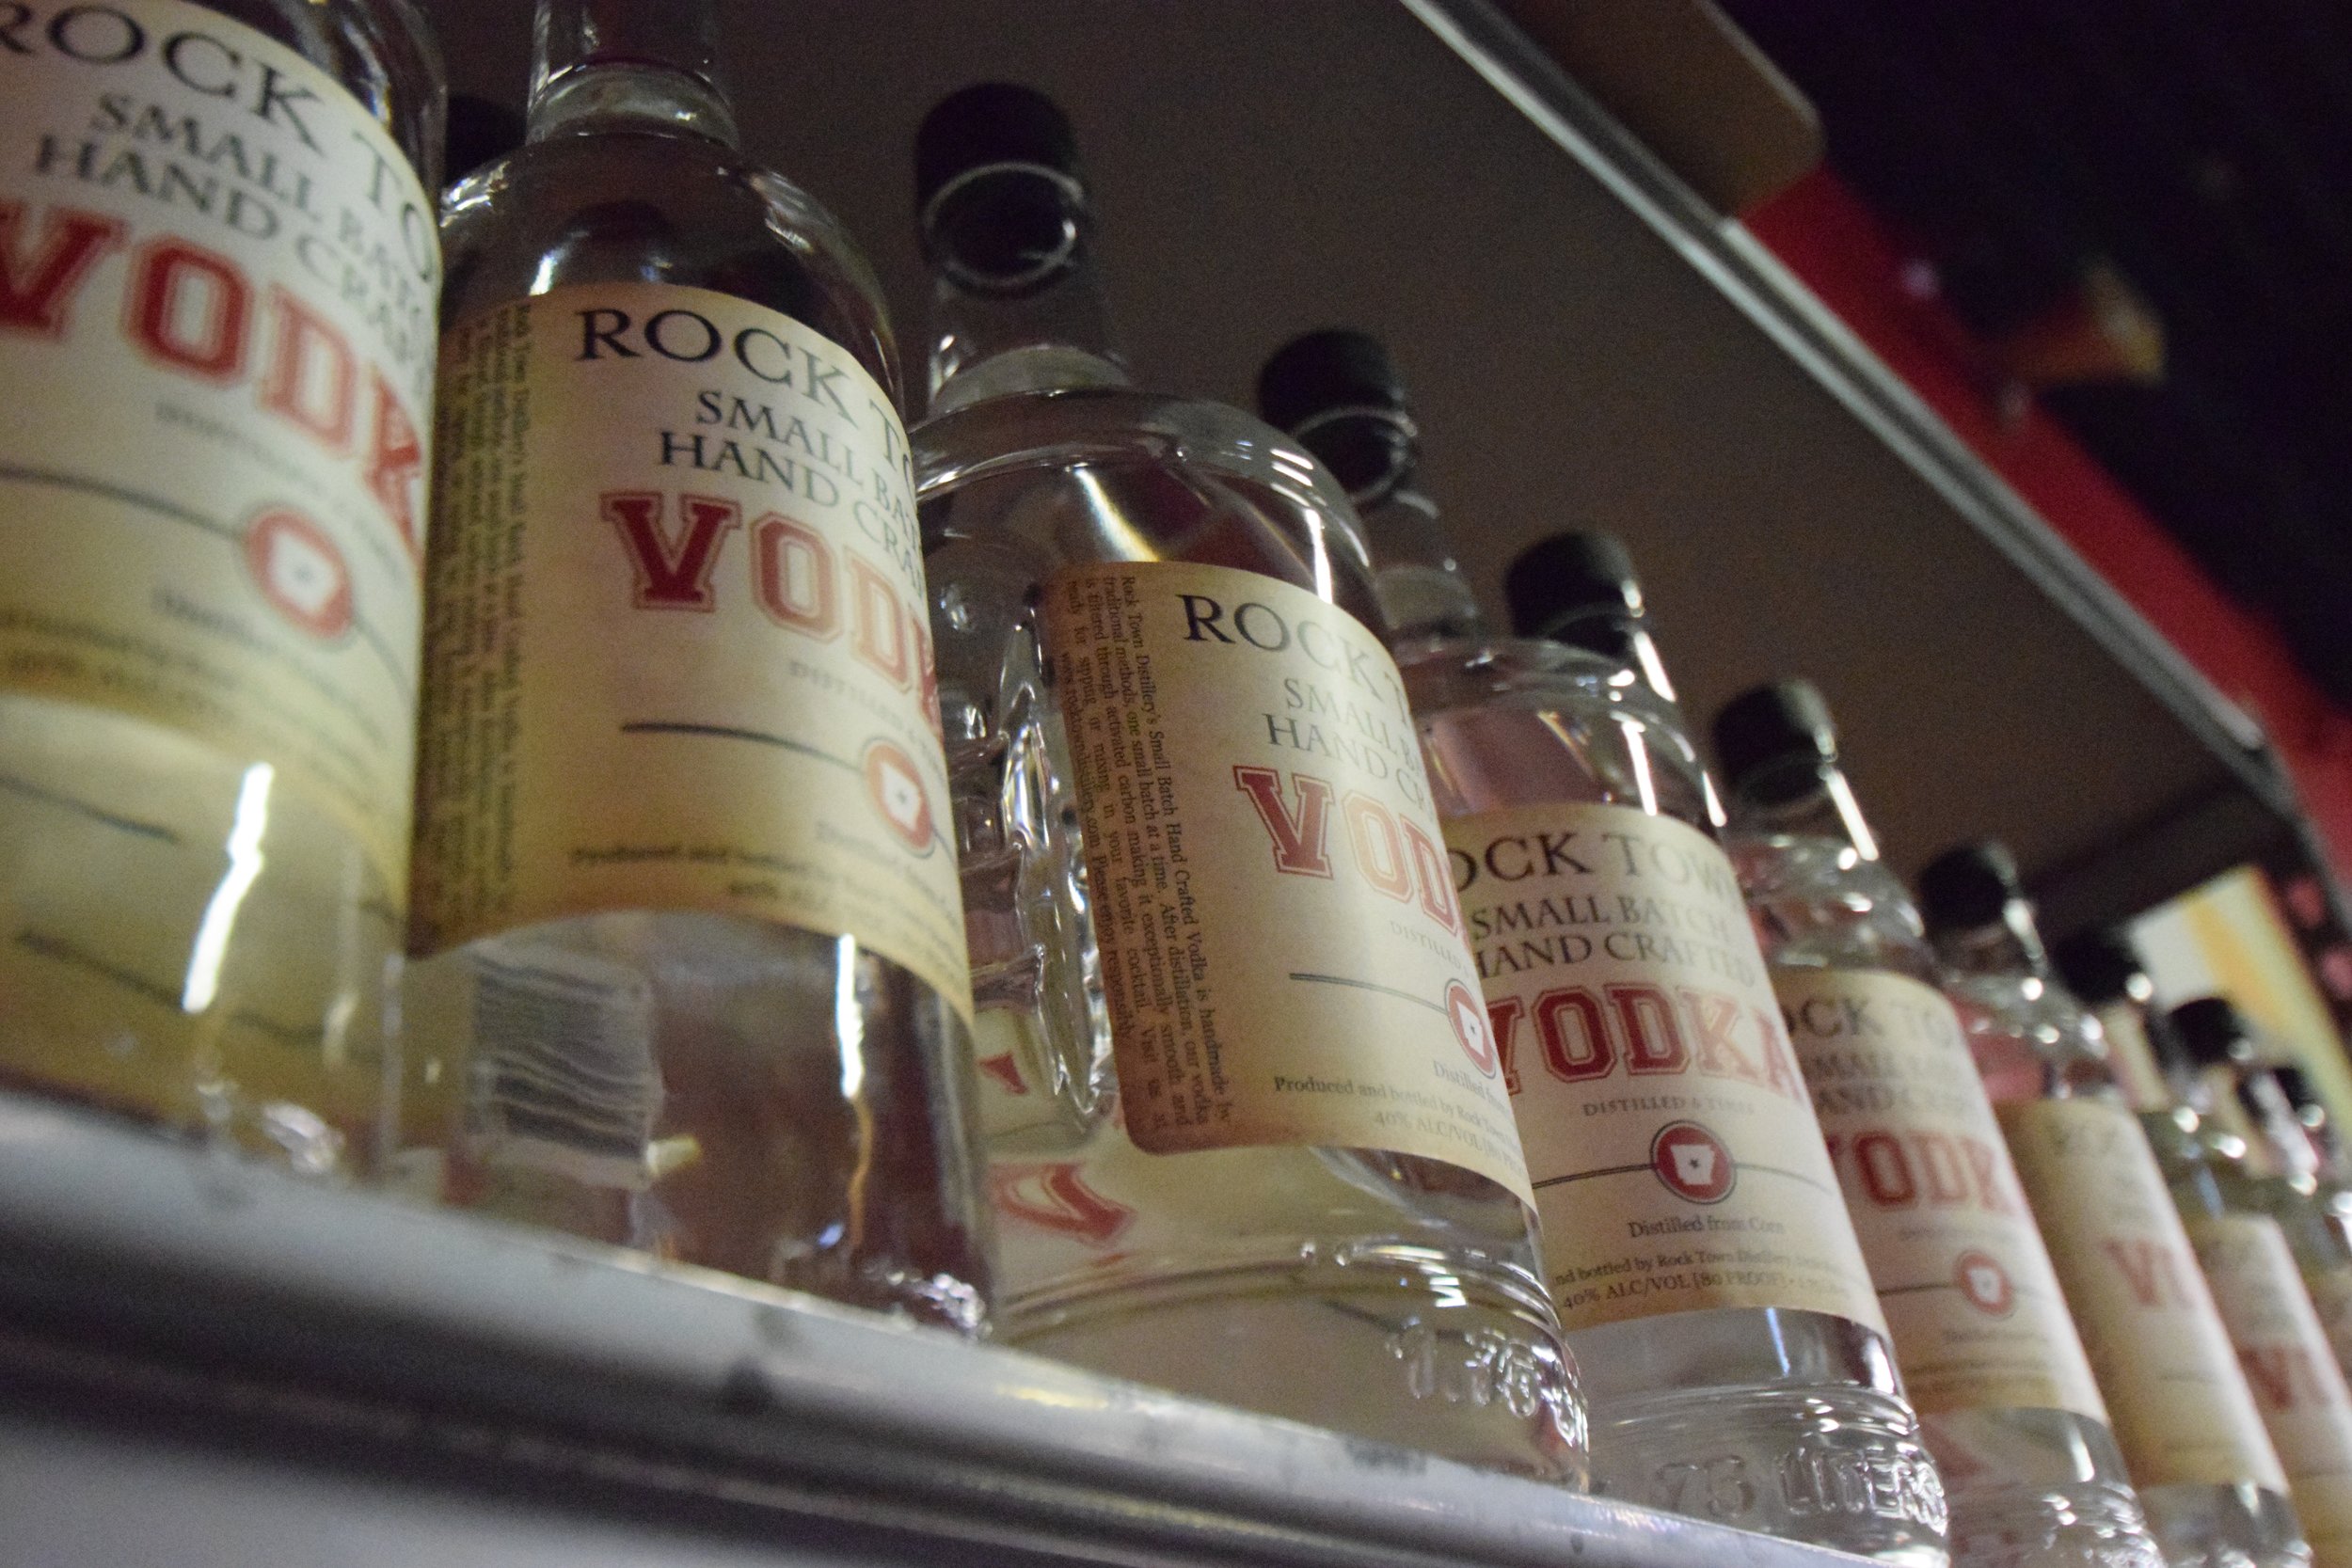 emily reeves dean rock town distillery vodka bottles